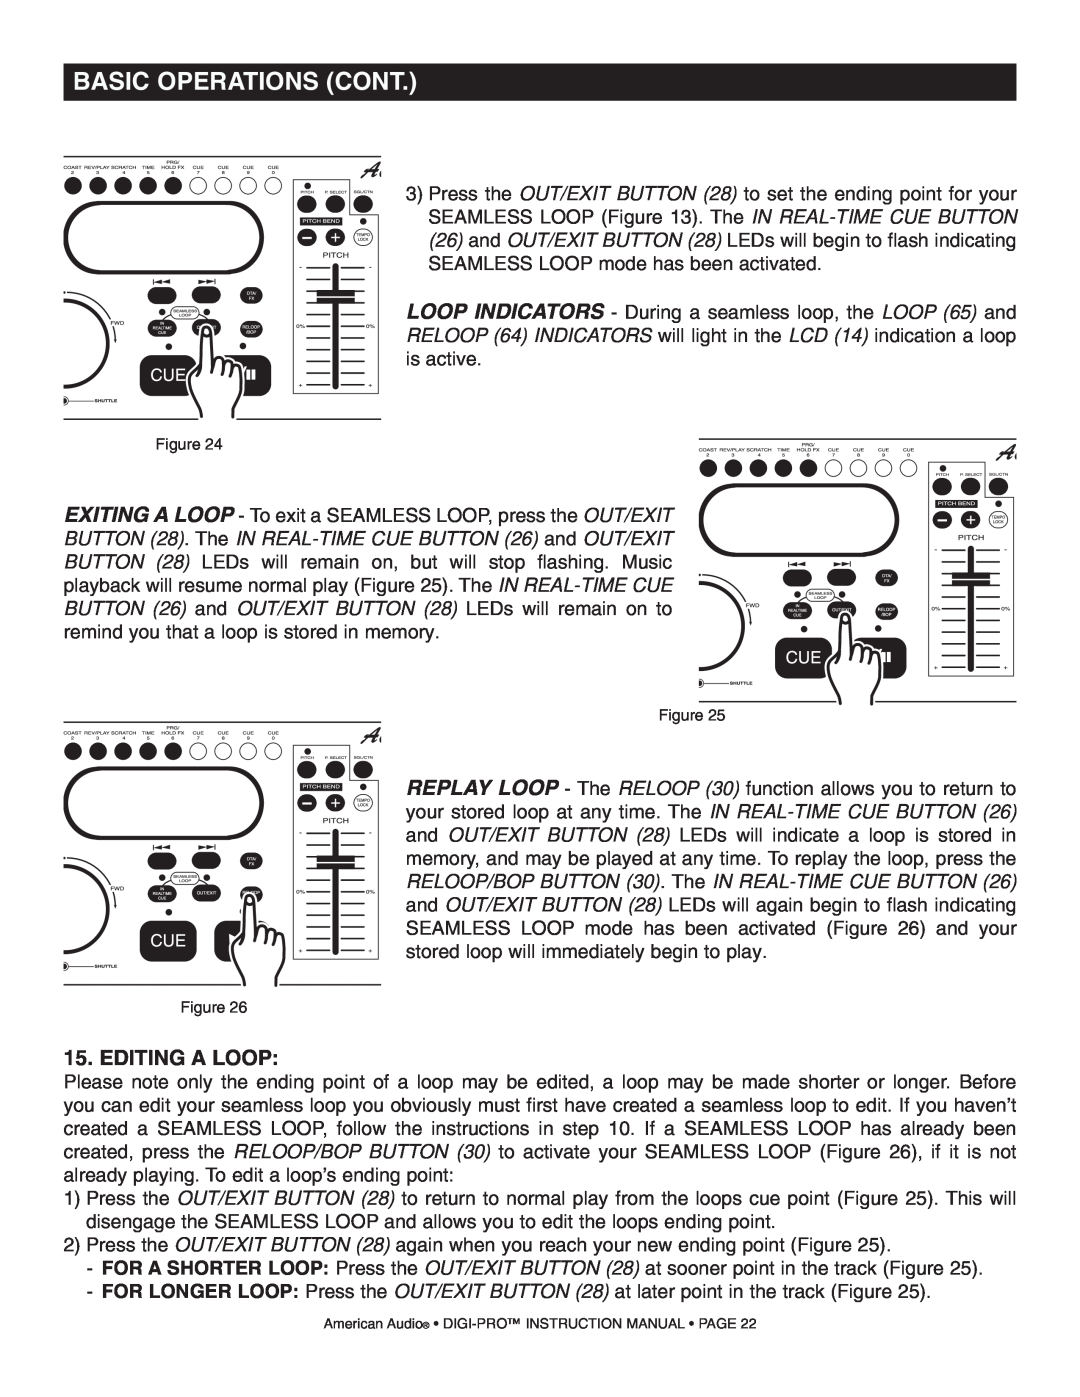 American Audio DIGI-PRO operating instructions Editing A Loop, Basic Operations Cont 